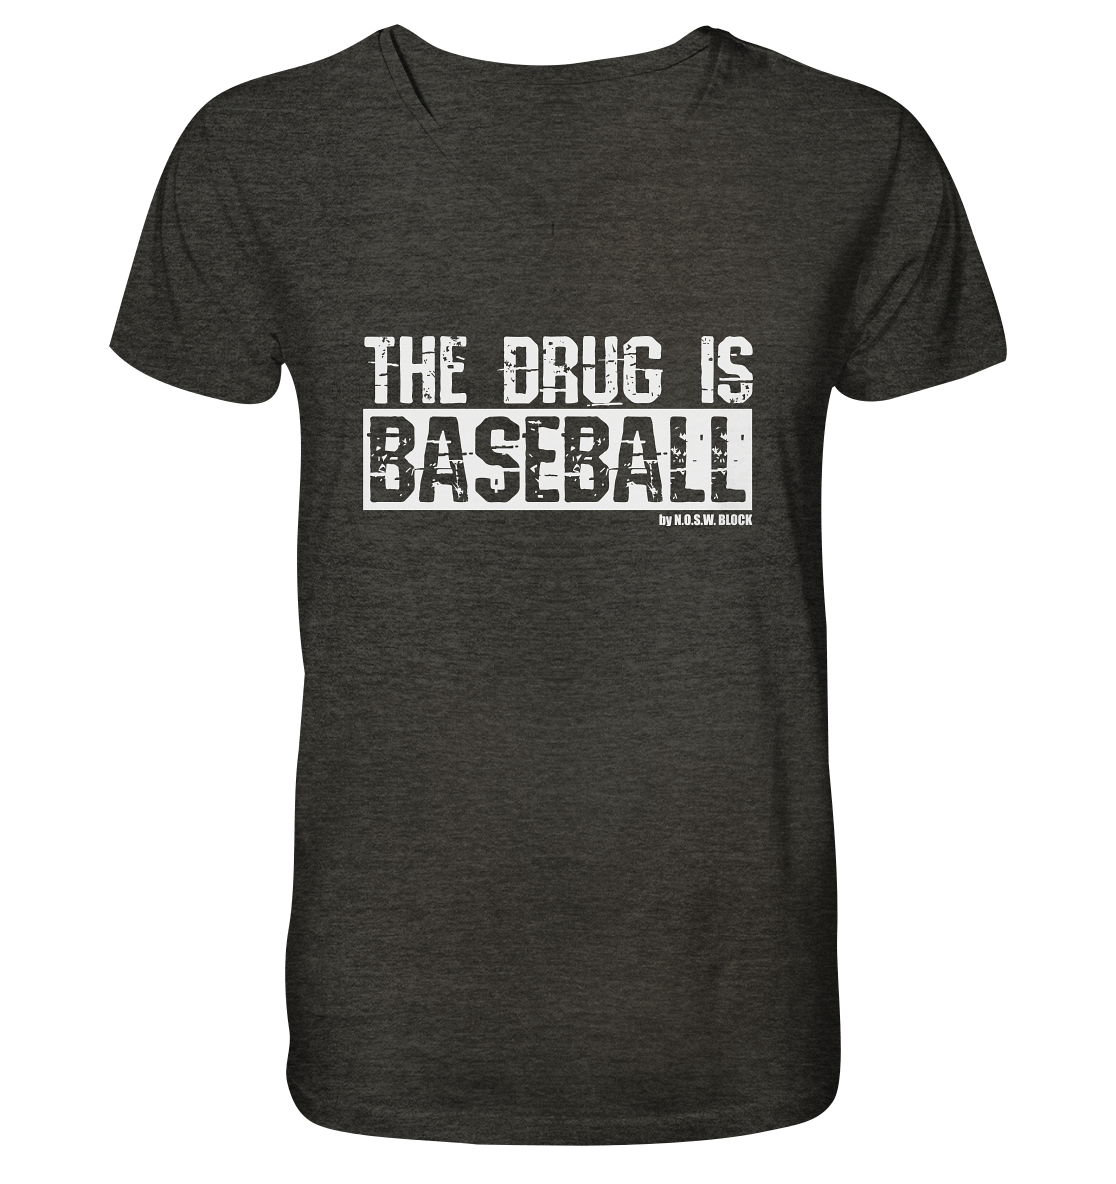 N.O.S.W. BLOCk Fanblock Shirt "THE DRUG IS BASEBALL" Männer Organic V-Neck T-Shirt dark heather grau